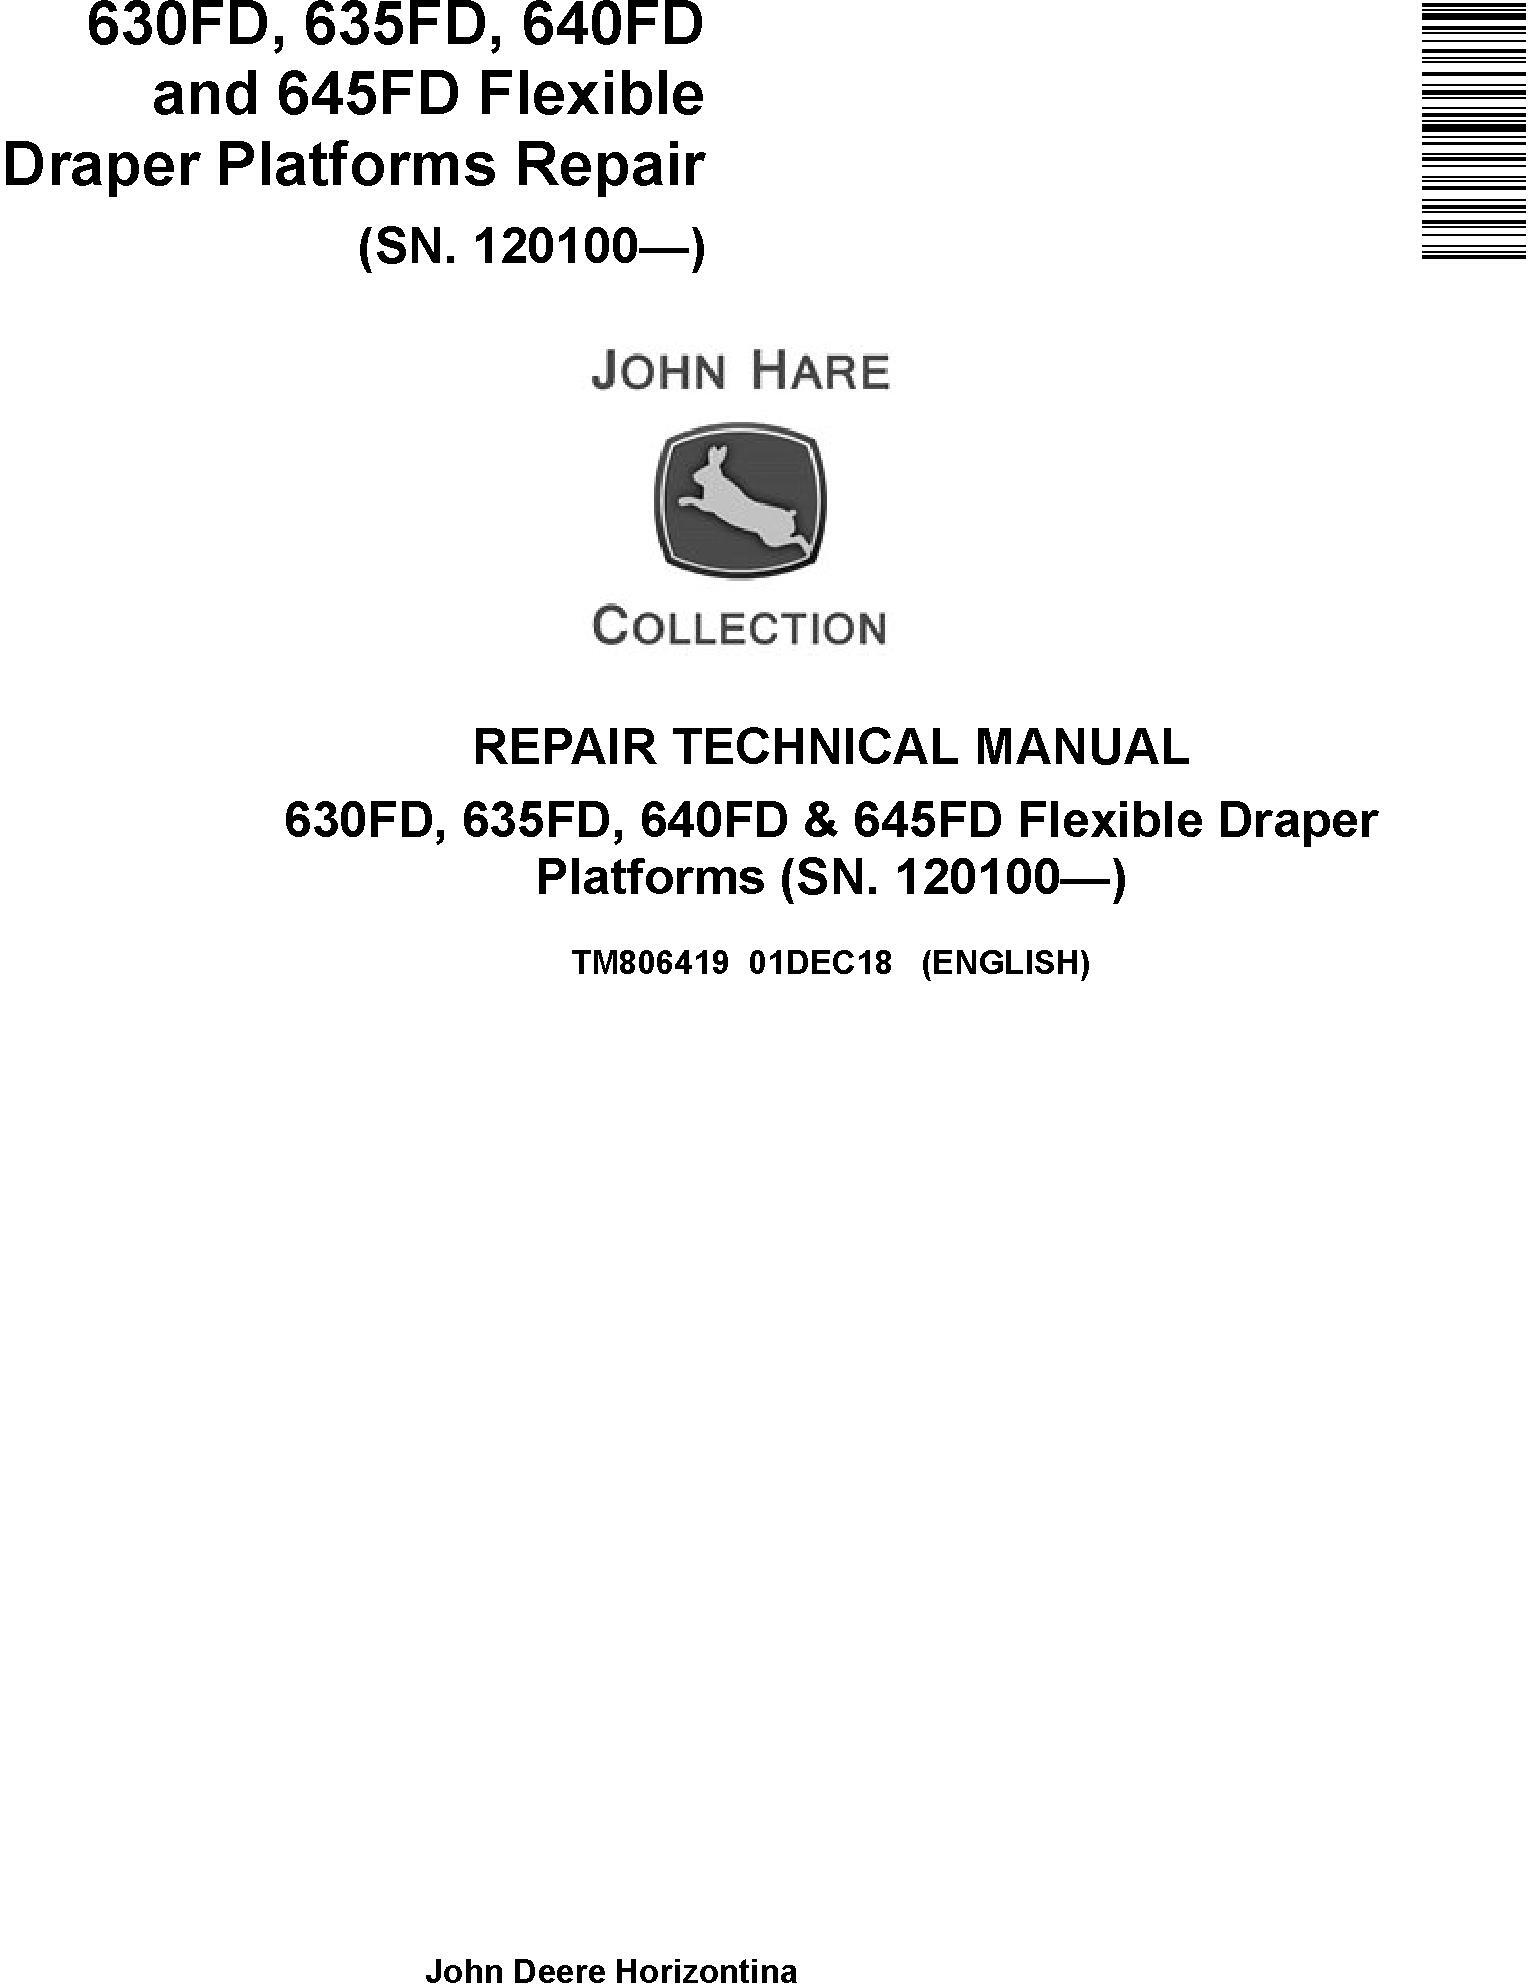 John Deere 630FD to 645FD Flexible Draper Platform Technical Manual TM806419